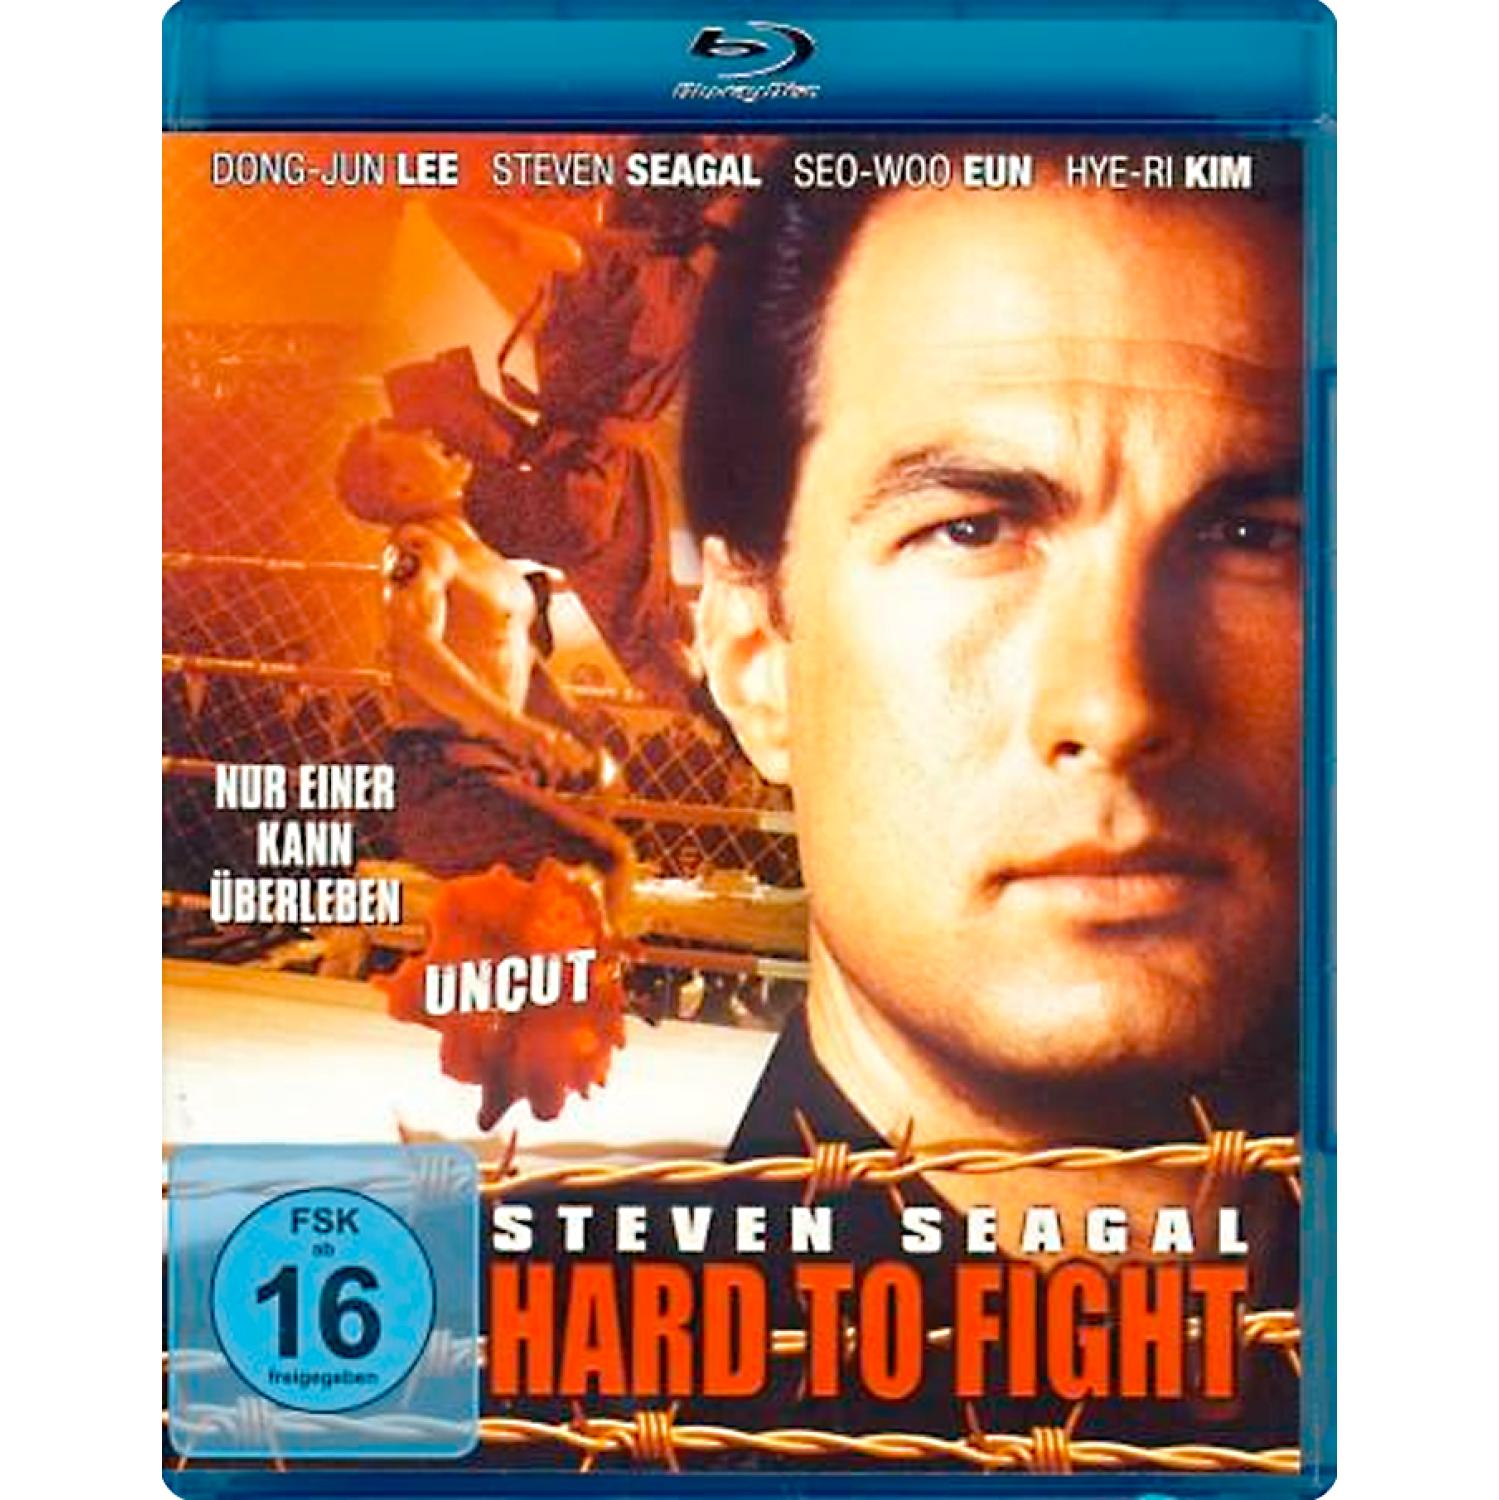 Fight Blu-ray to Hard